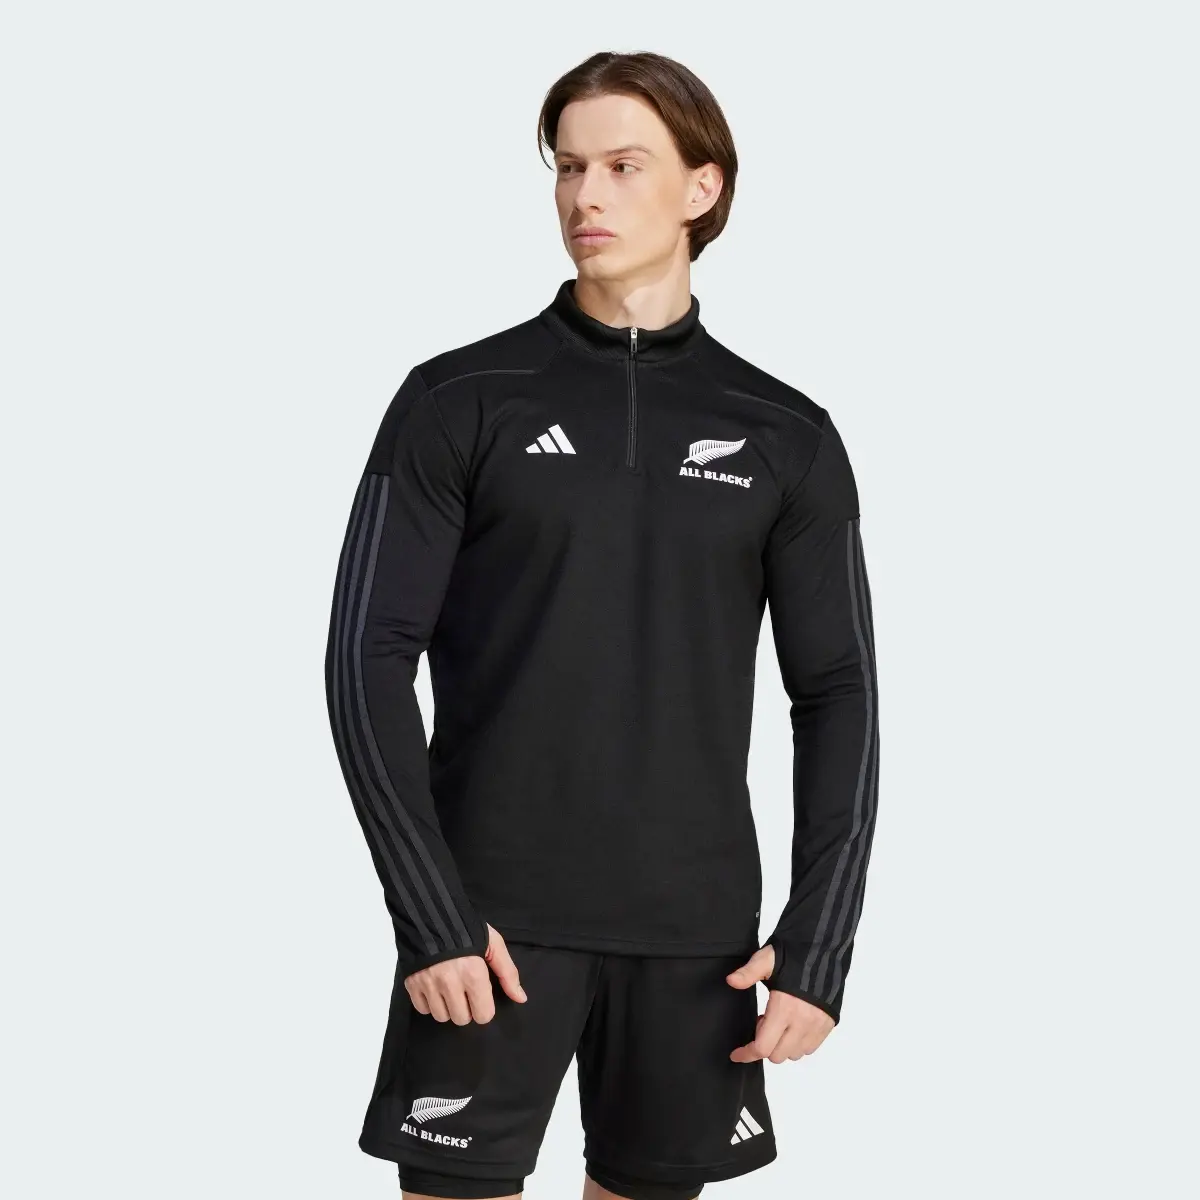 Adidas All Blacks AEROREADY Warming Long Sleeve Fleece Top. 2